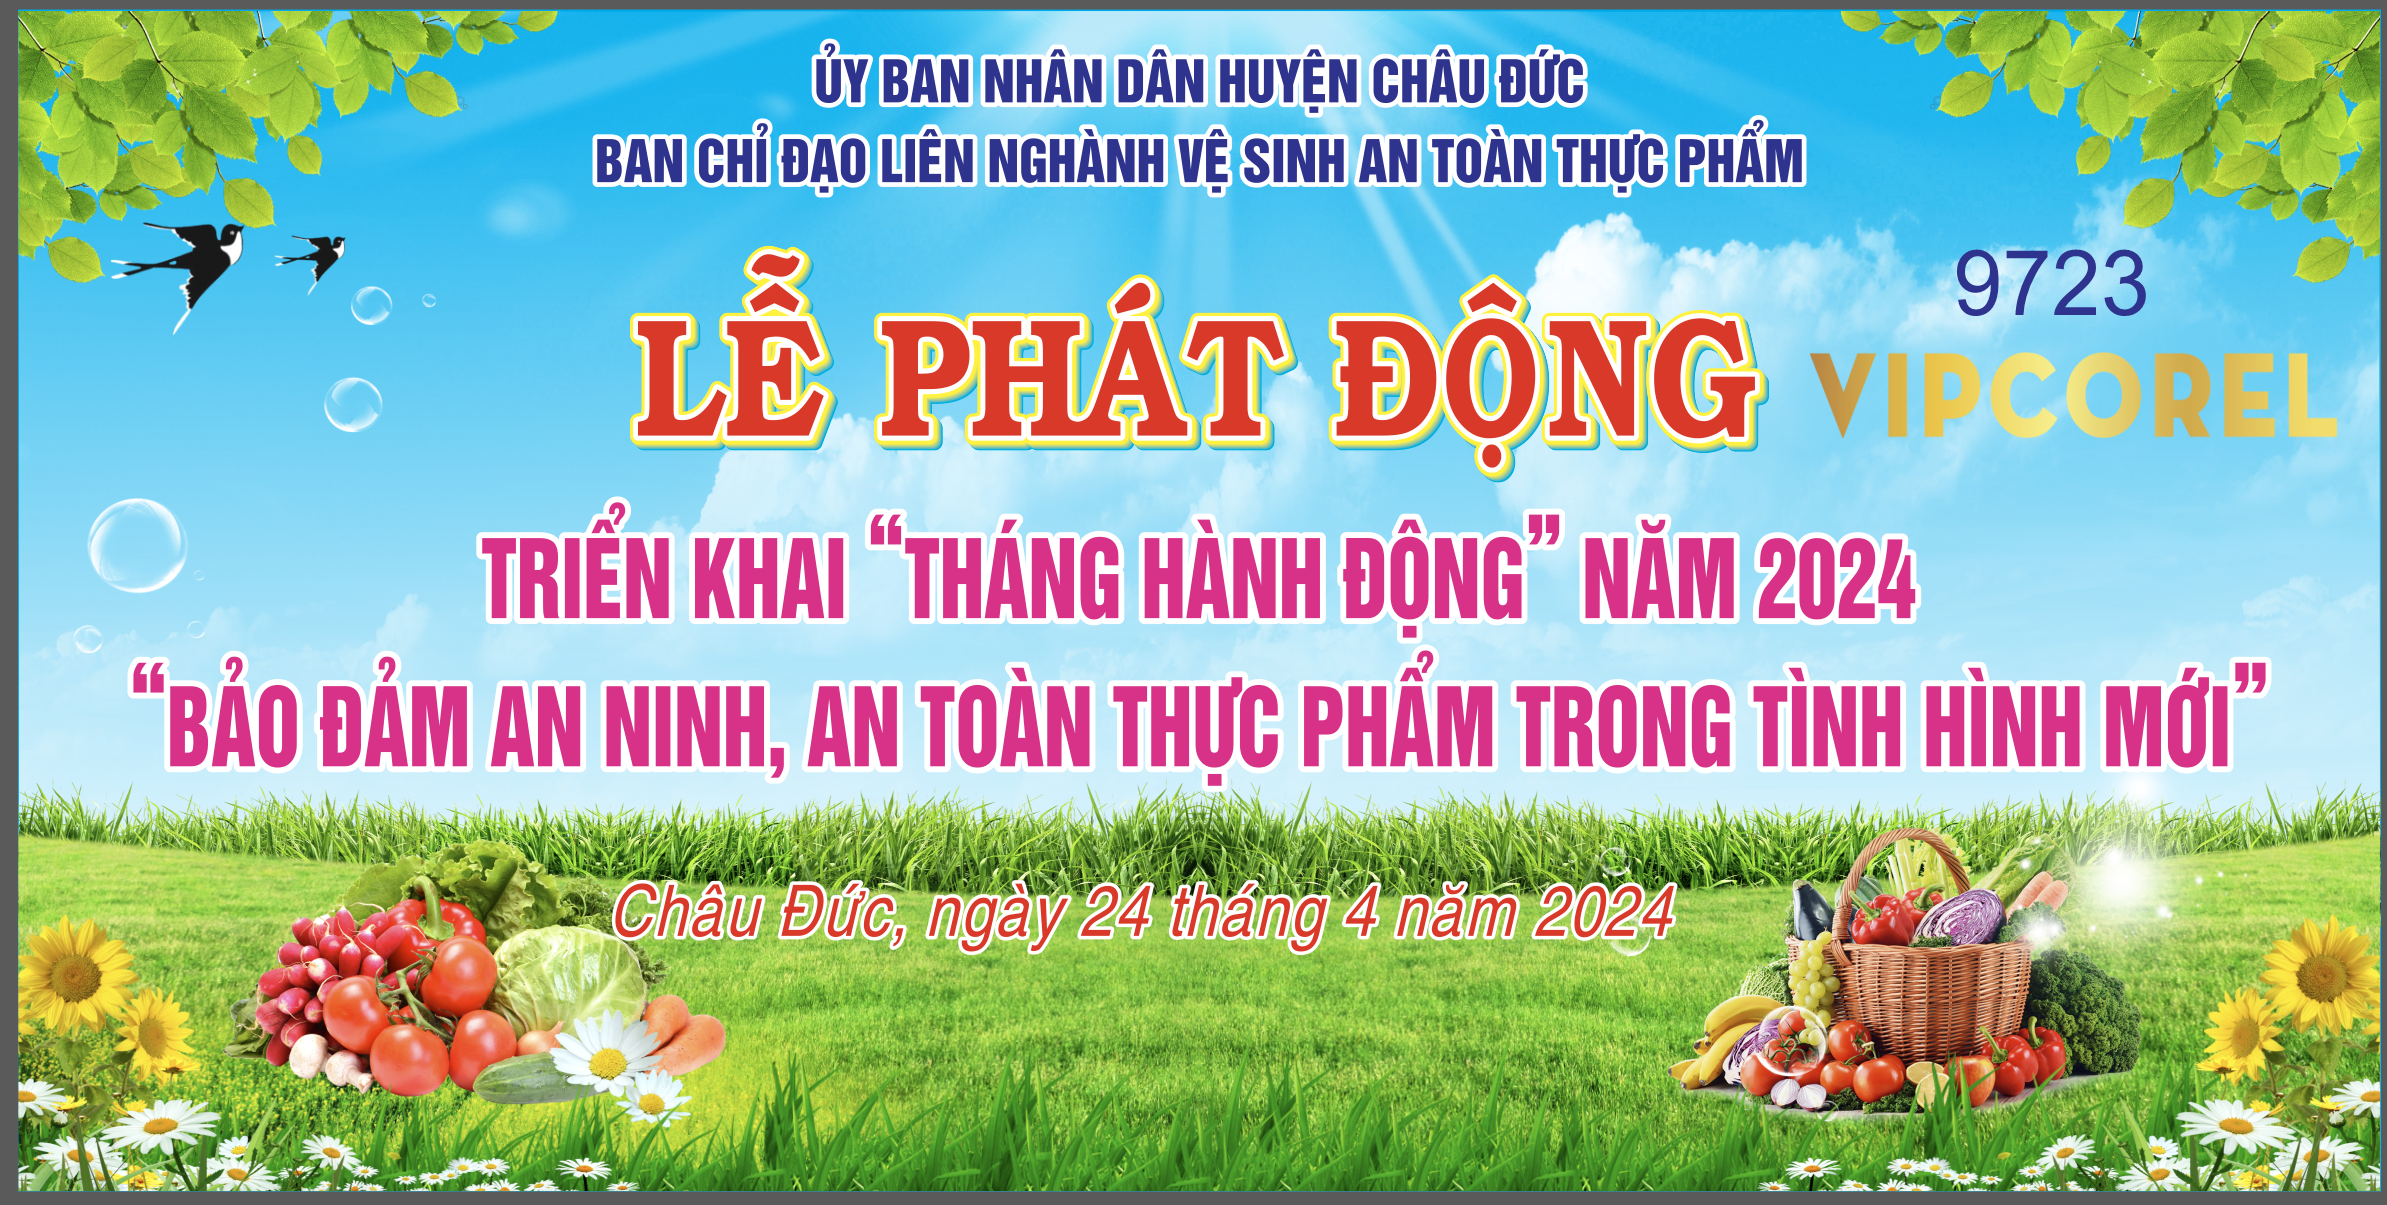 le phat dong an ninh an toan thuc pham.png